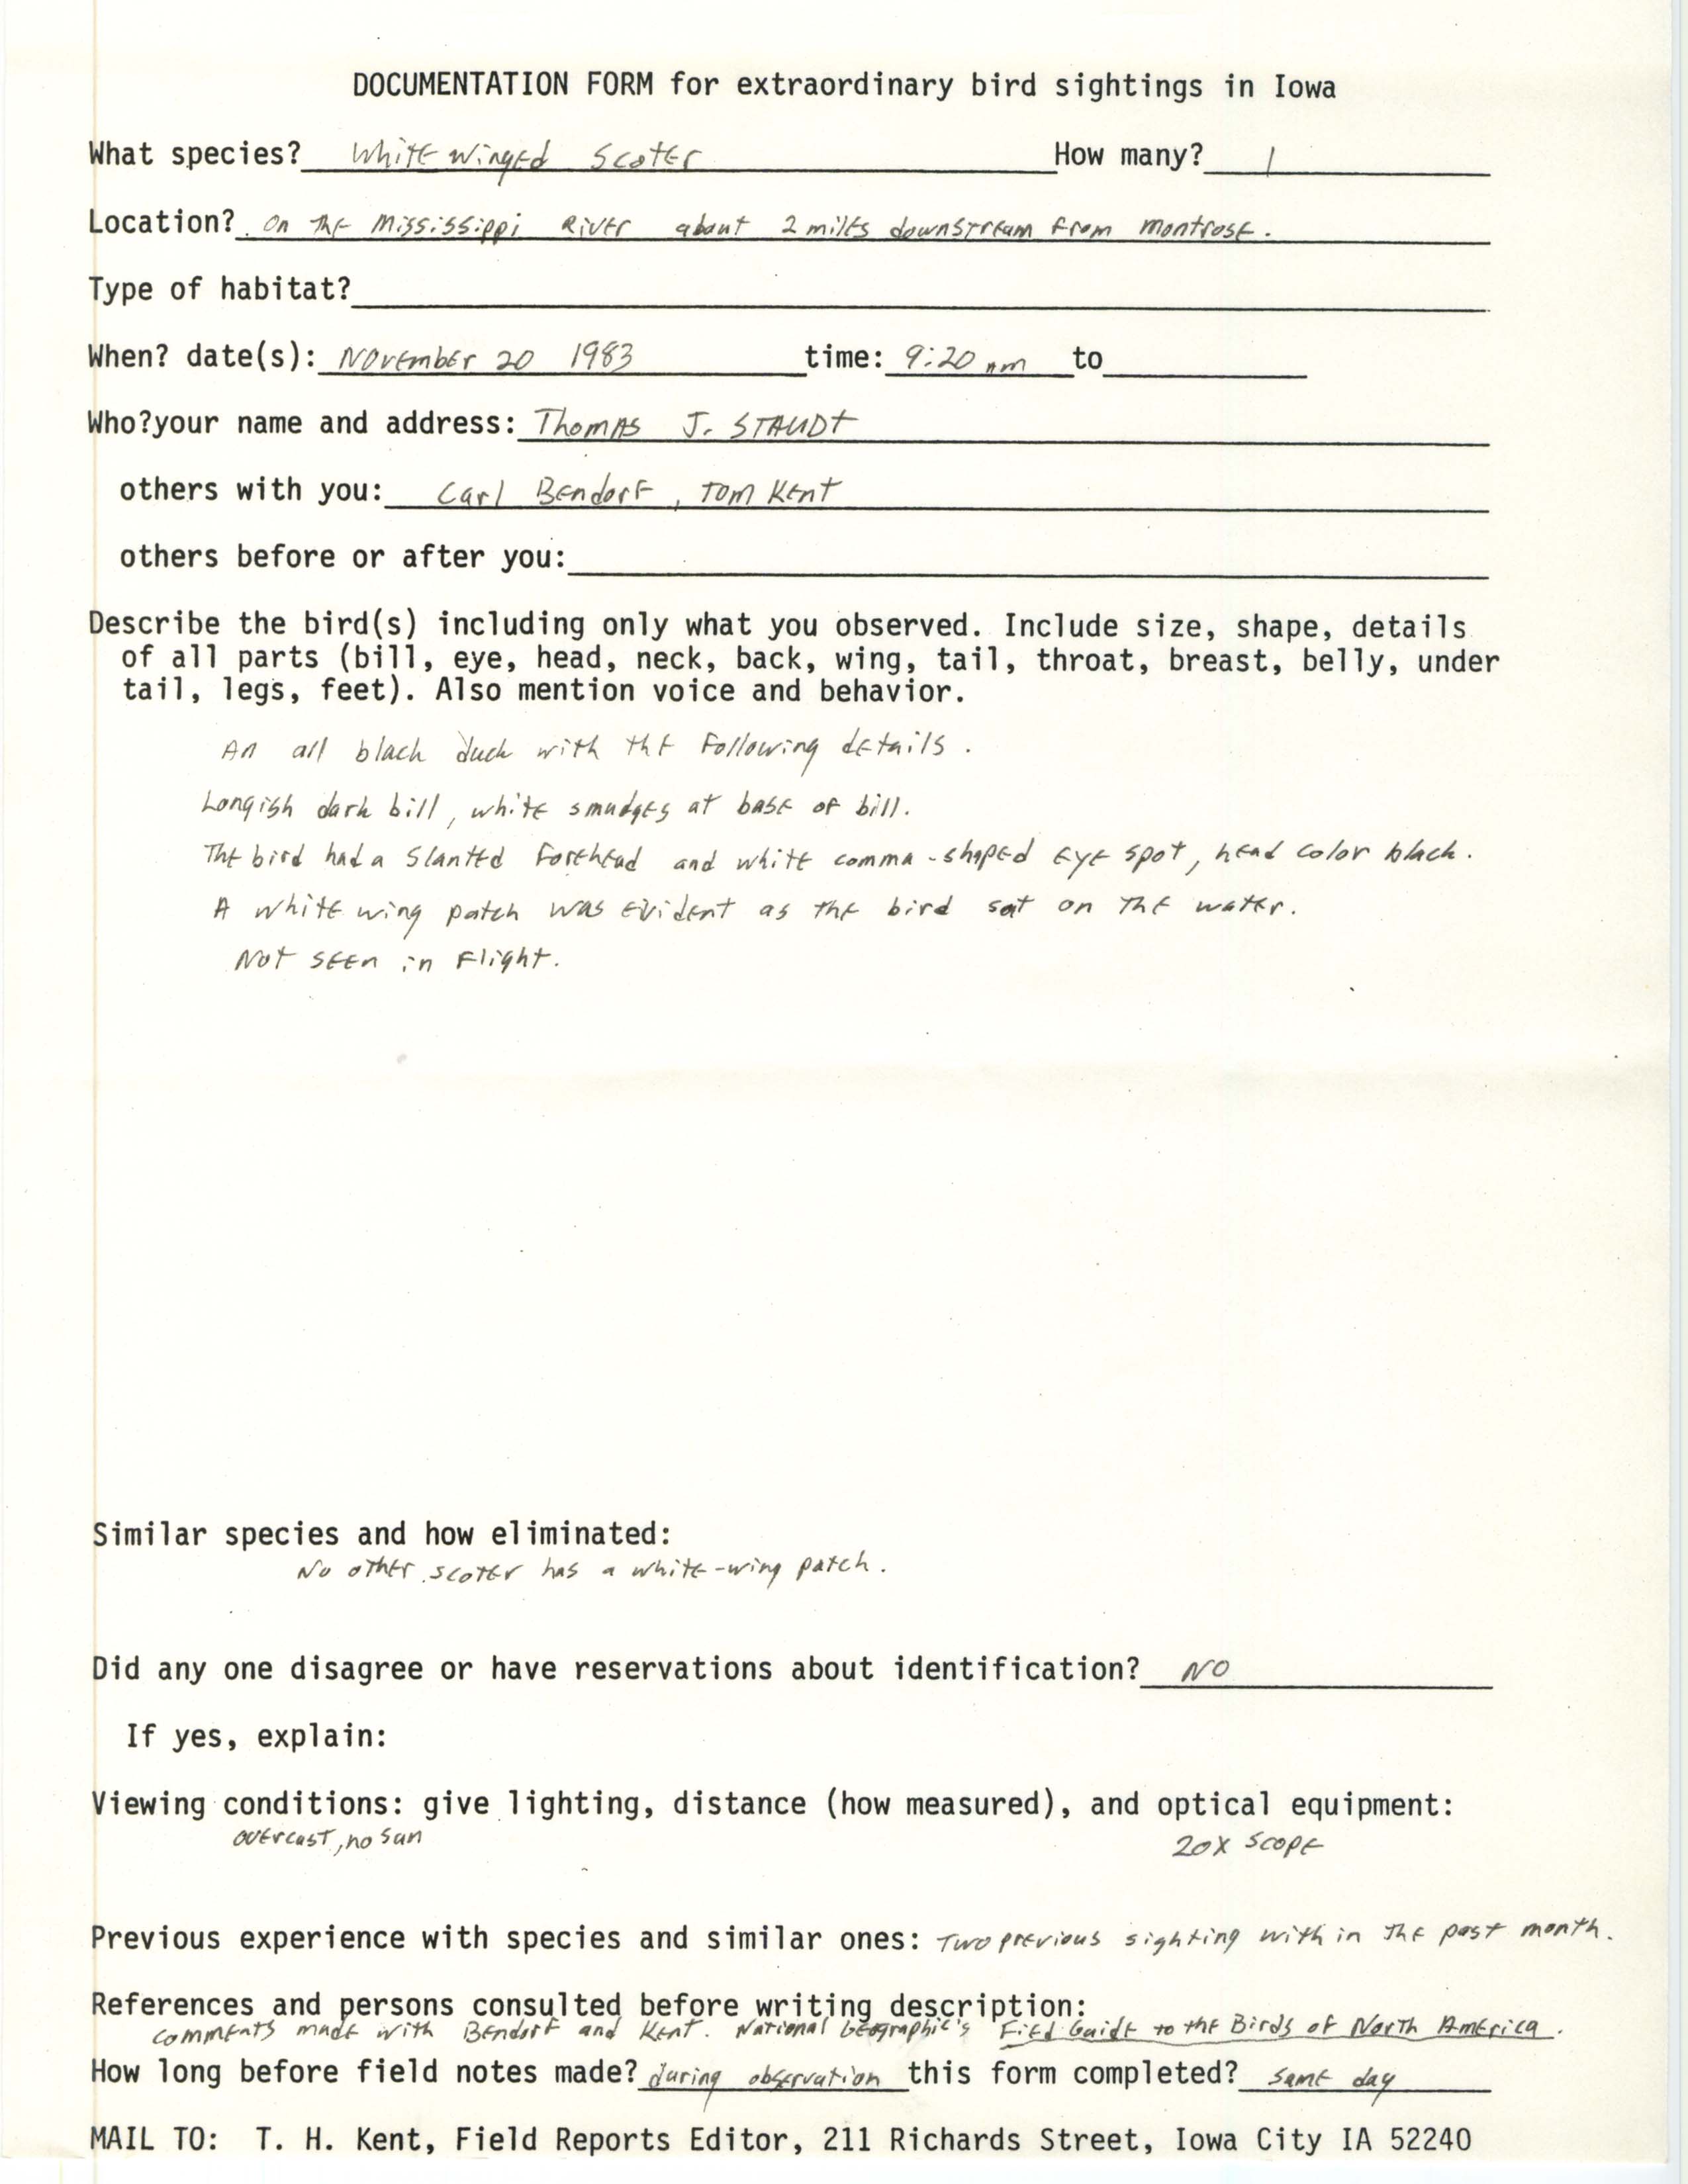 Rare bird documentation form for White-winged Scoter near Montrose in 1983